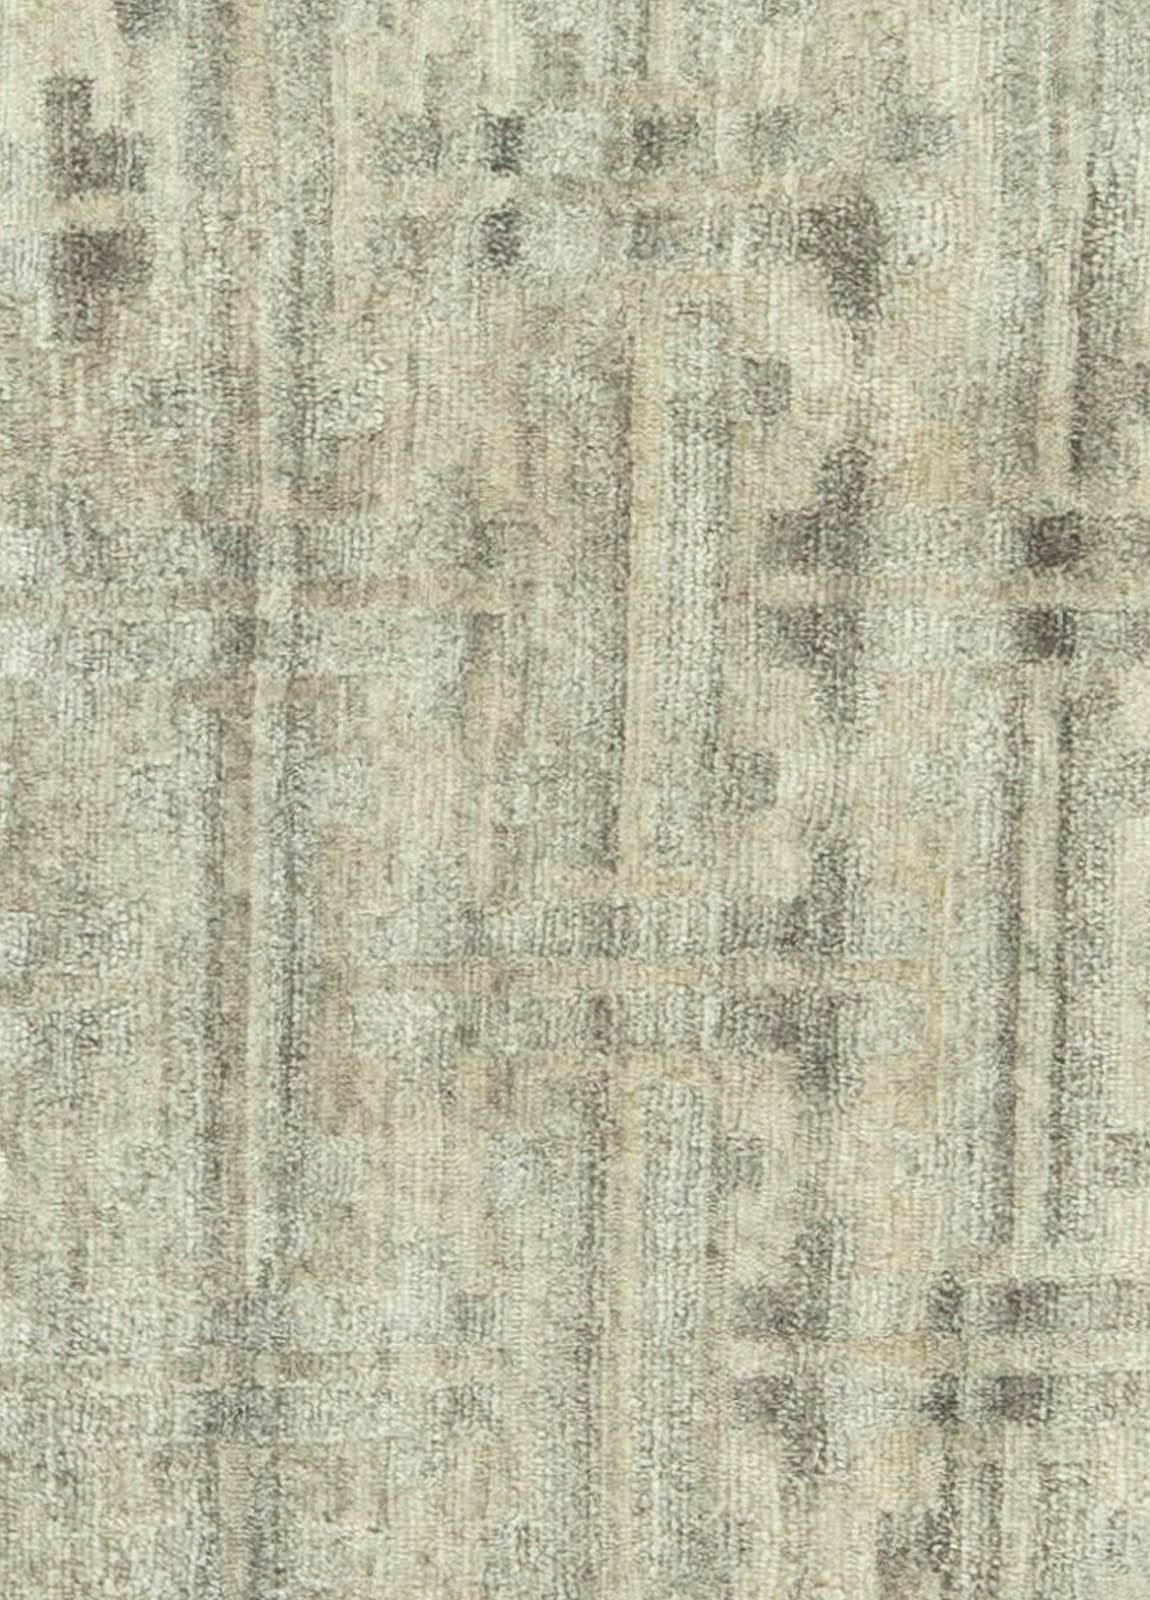 Contemporary Tibetan Terra rug in natural wool by Doris Leslie Blau.
Size: 4.10